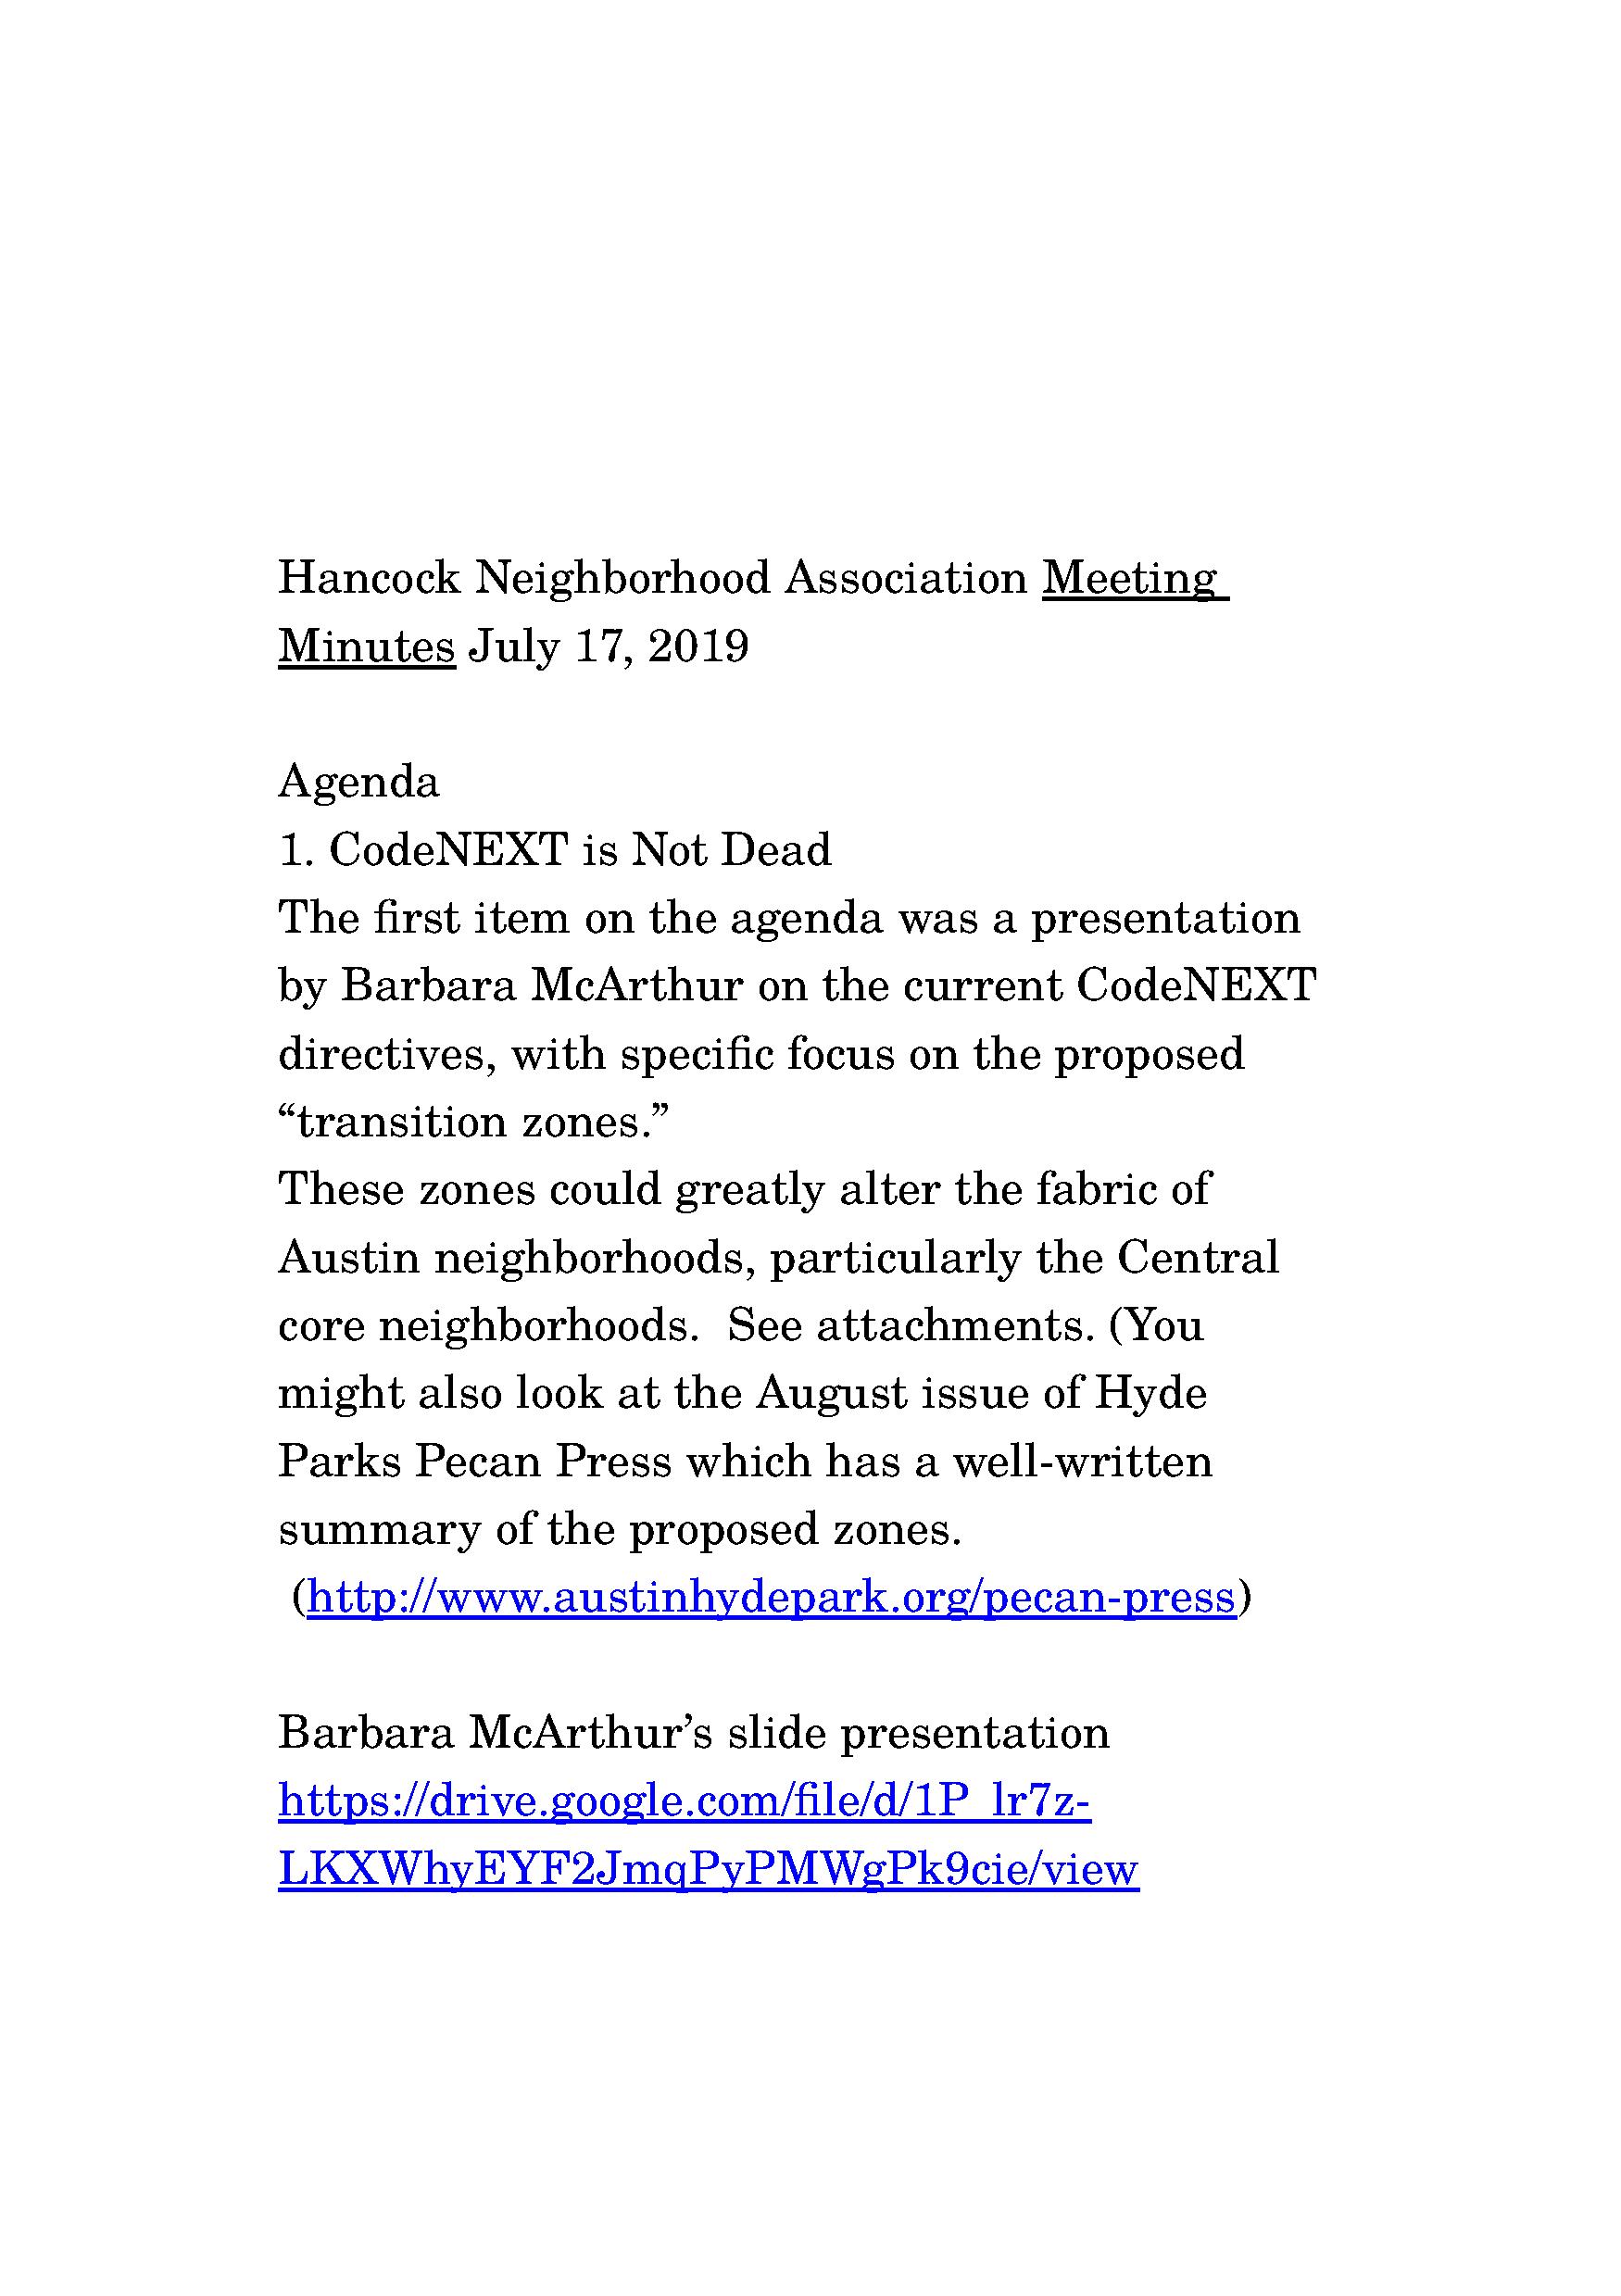 HNA meeting Minutes, July 17, 2019.pdf